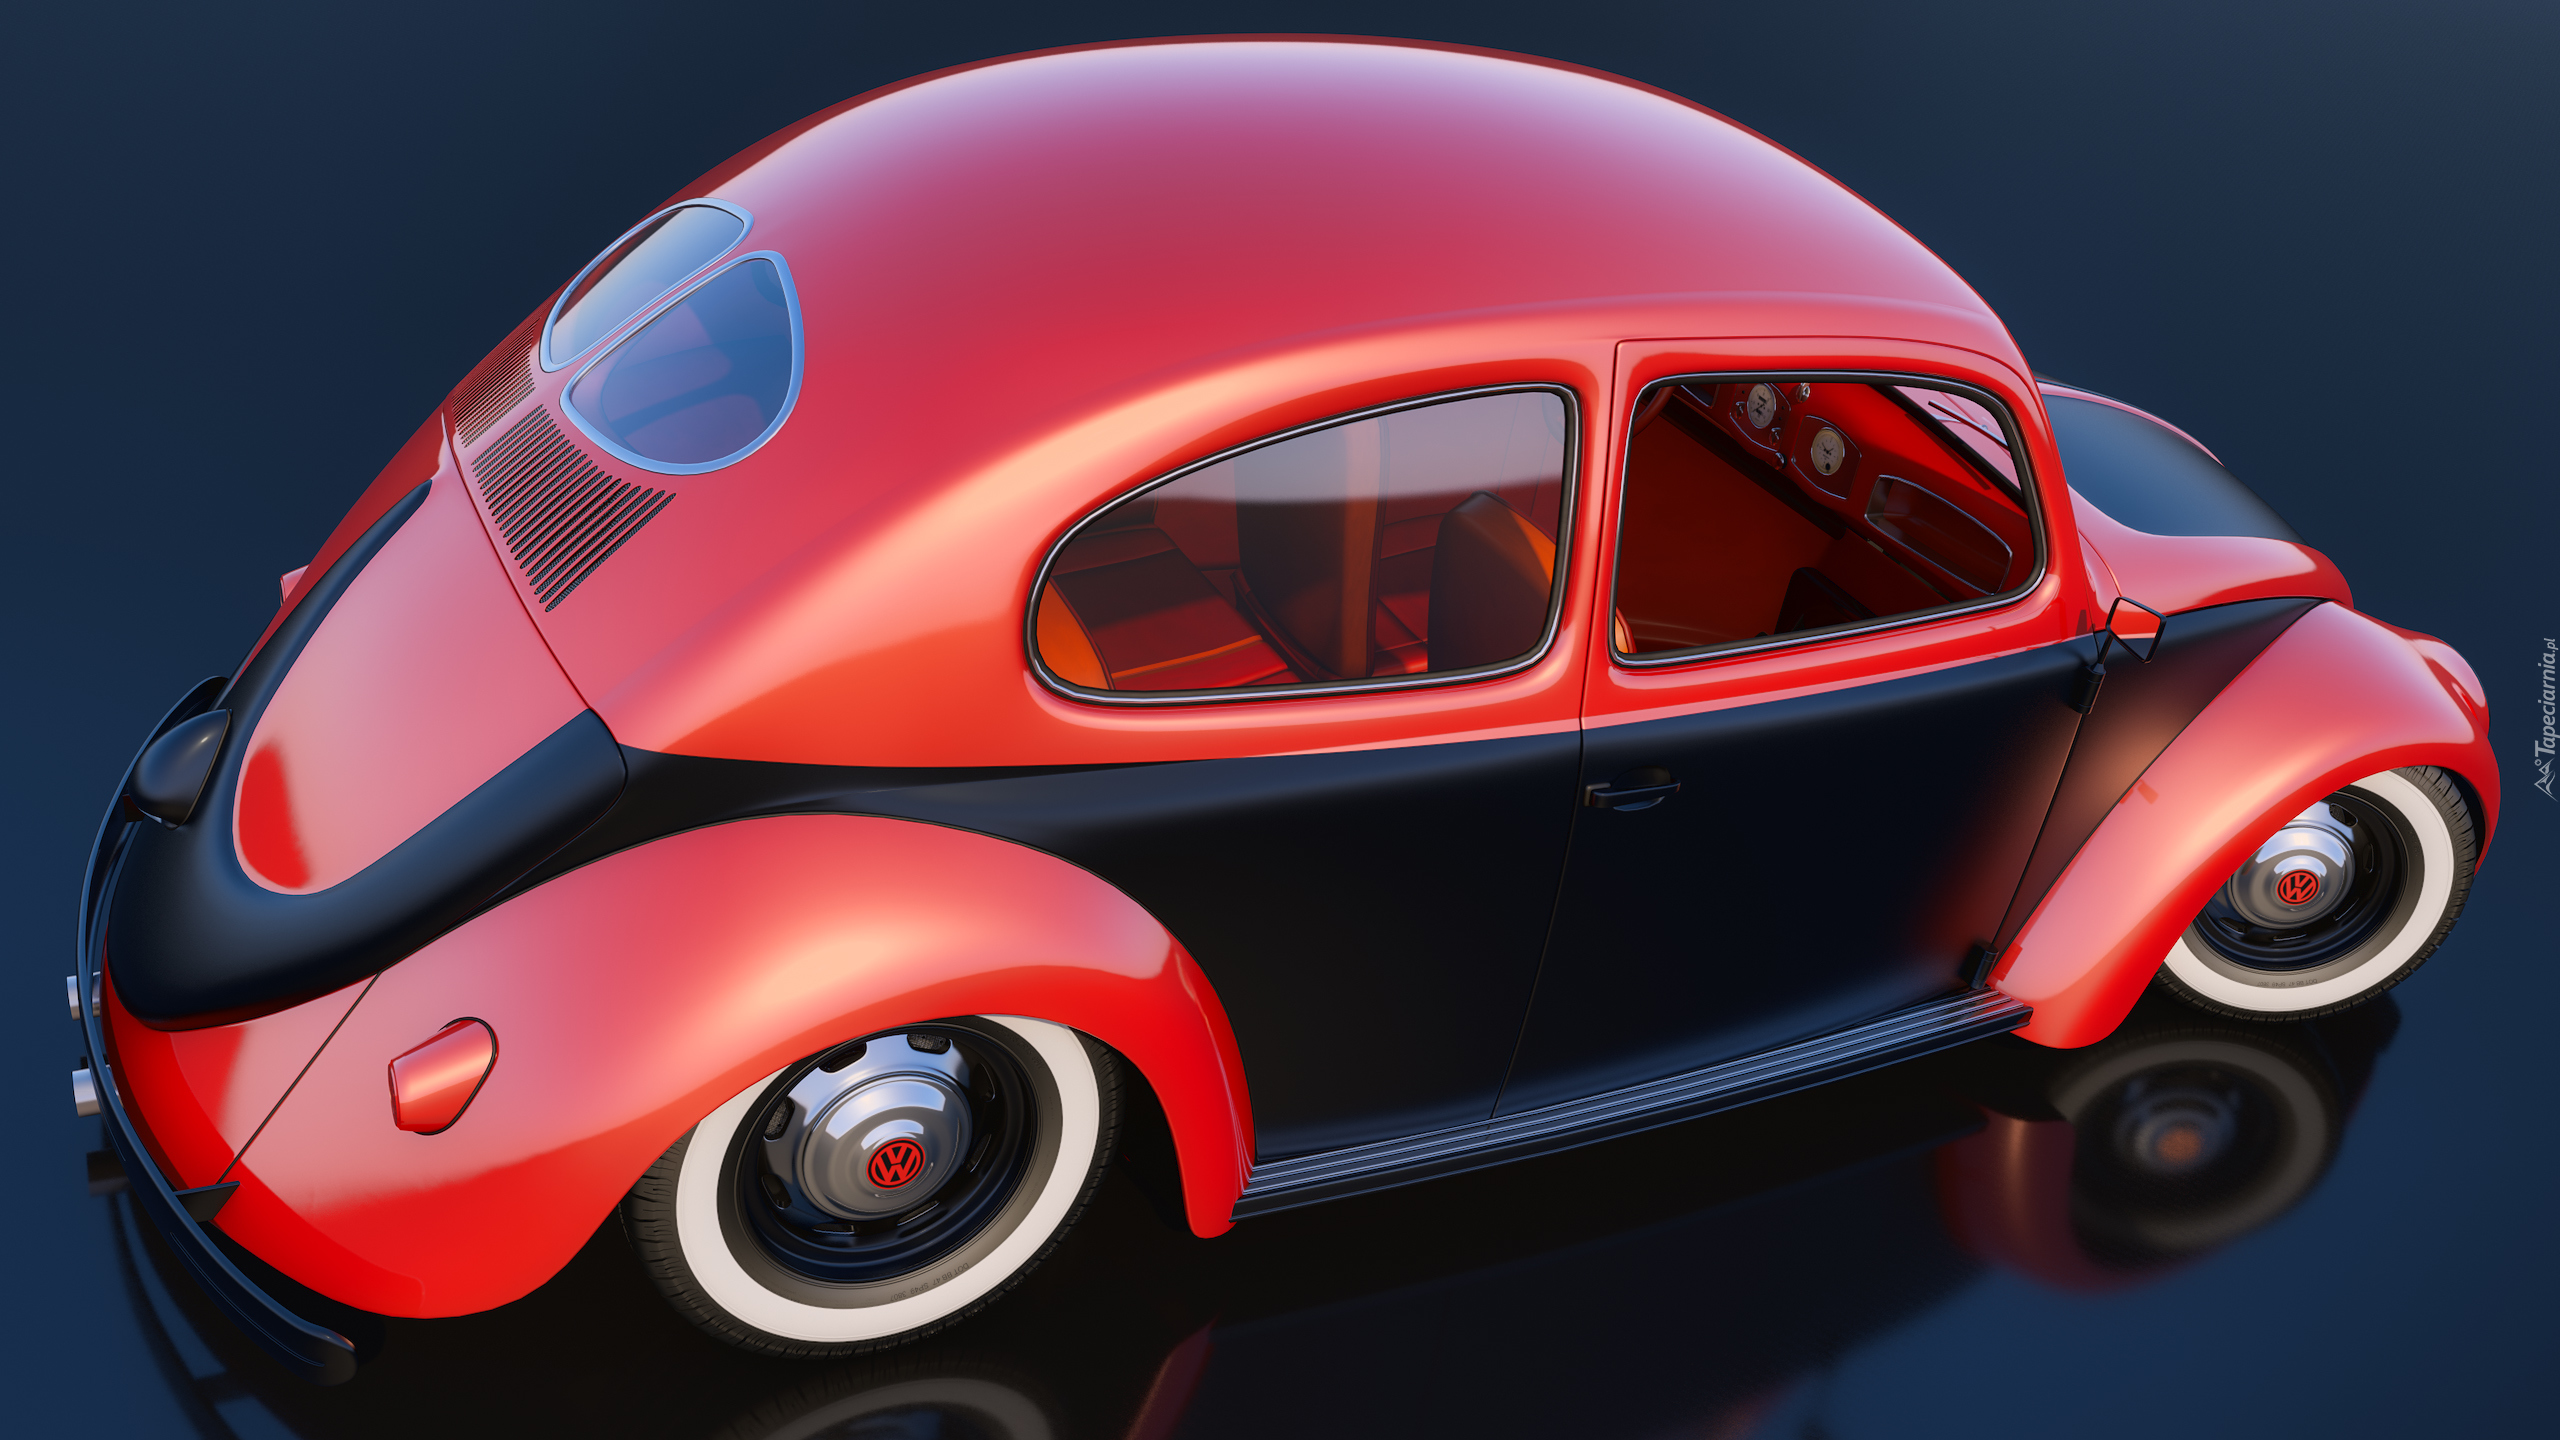 Zabytkowy, Volkswagen Beetle, 1950